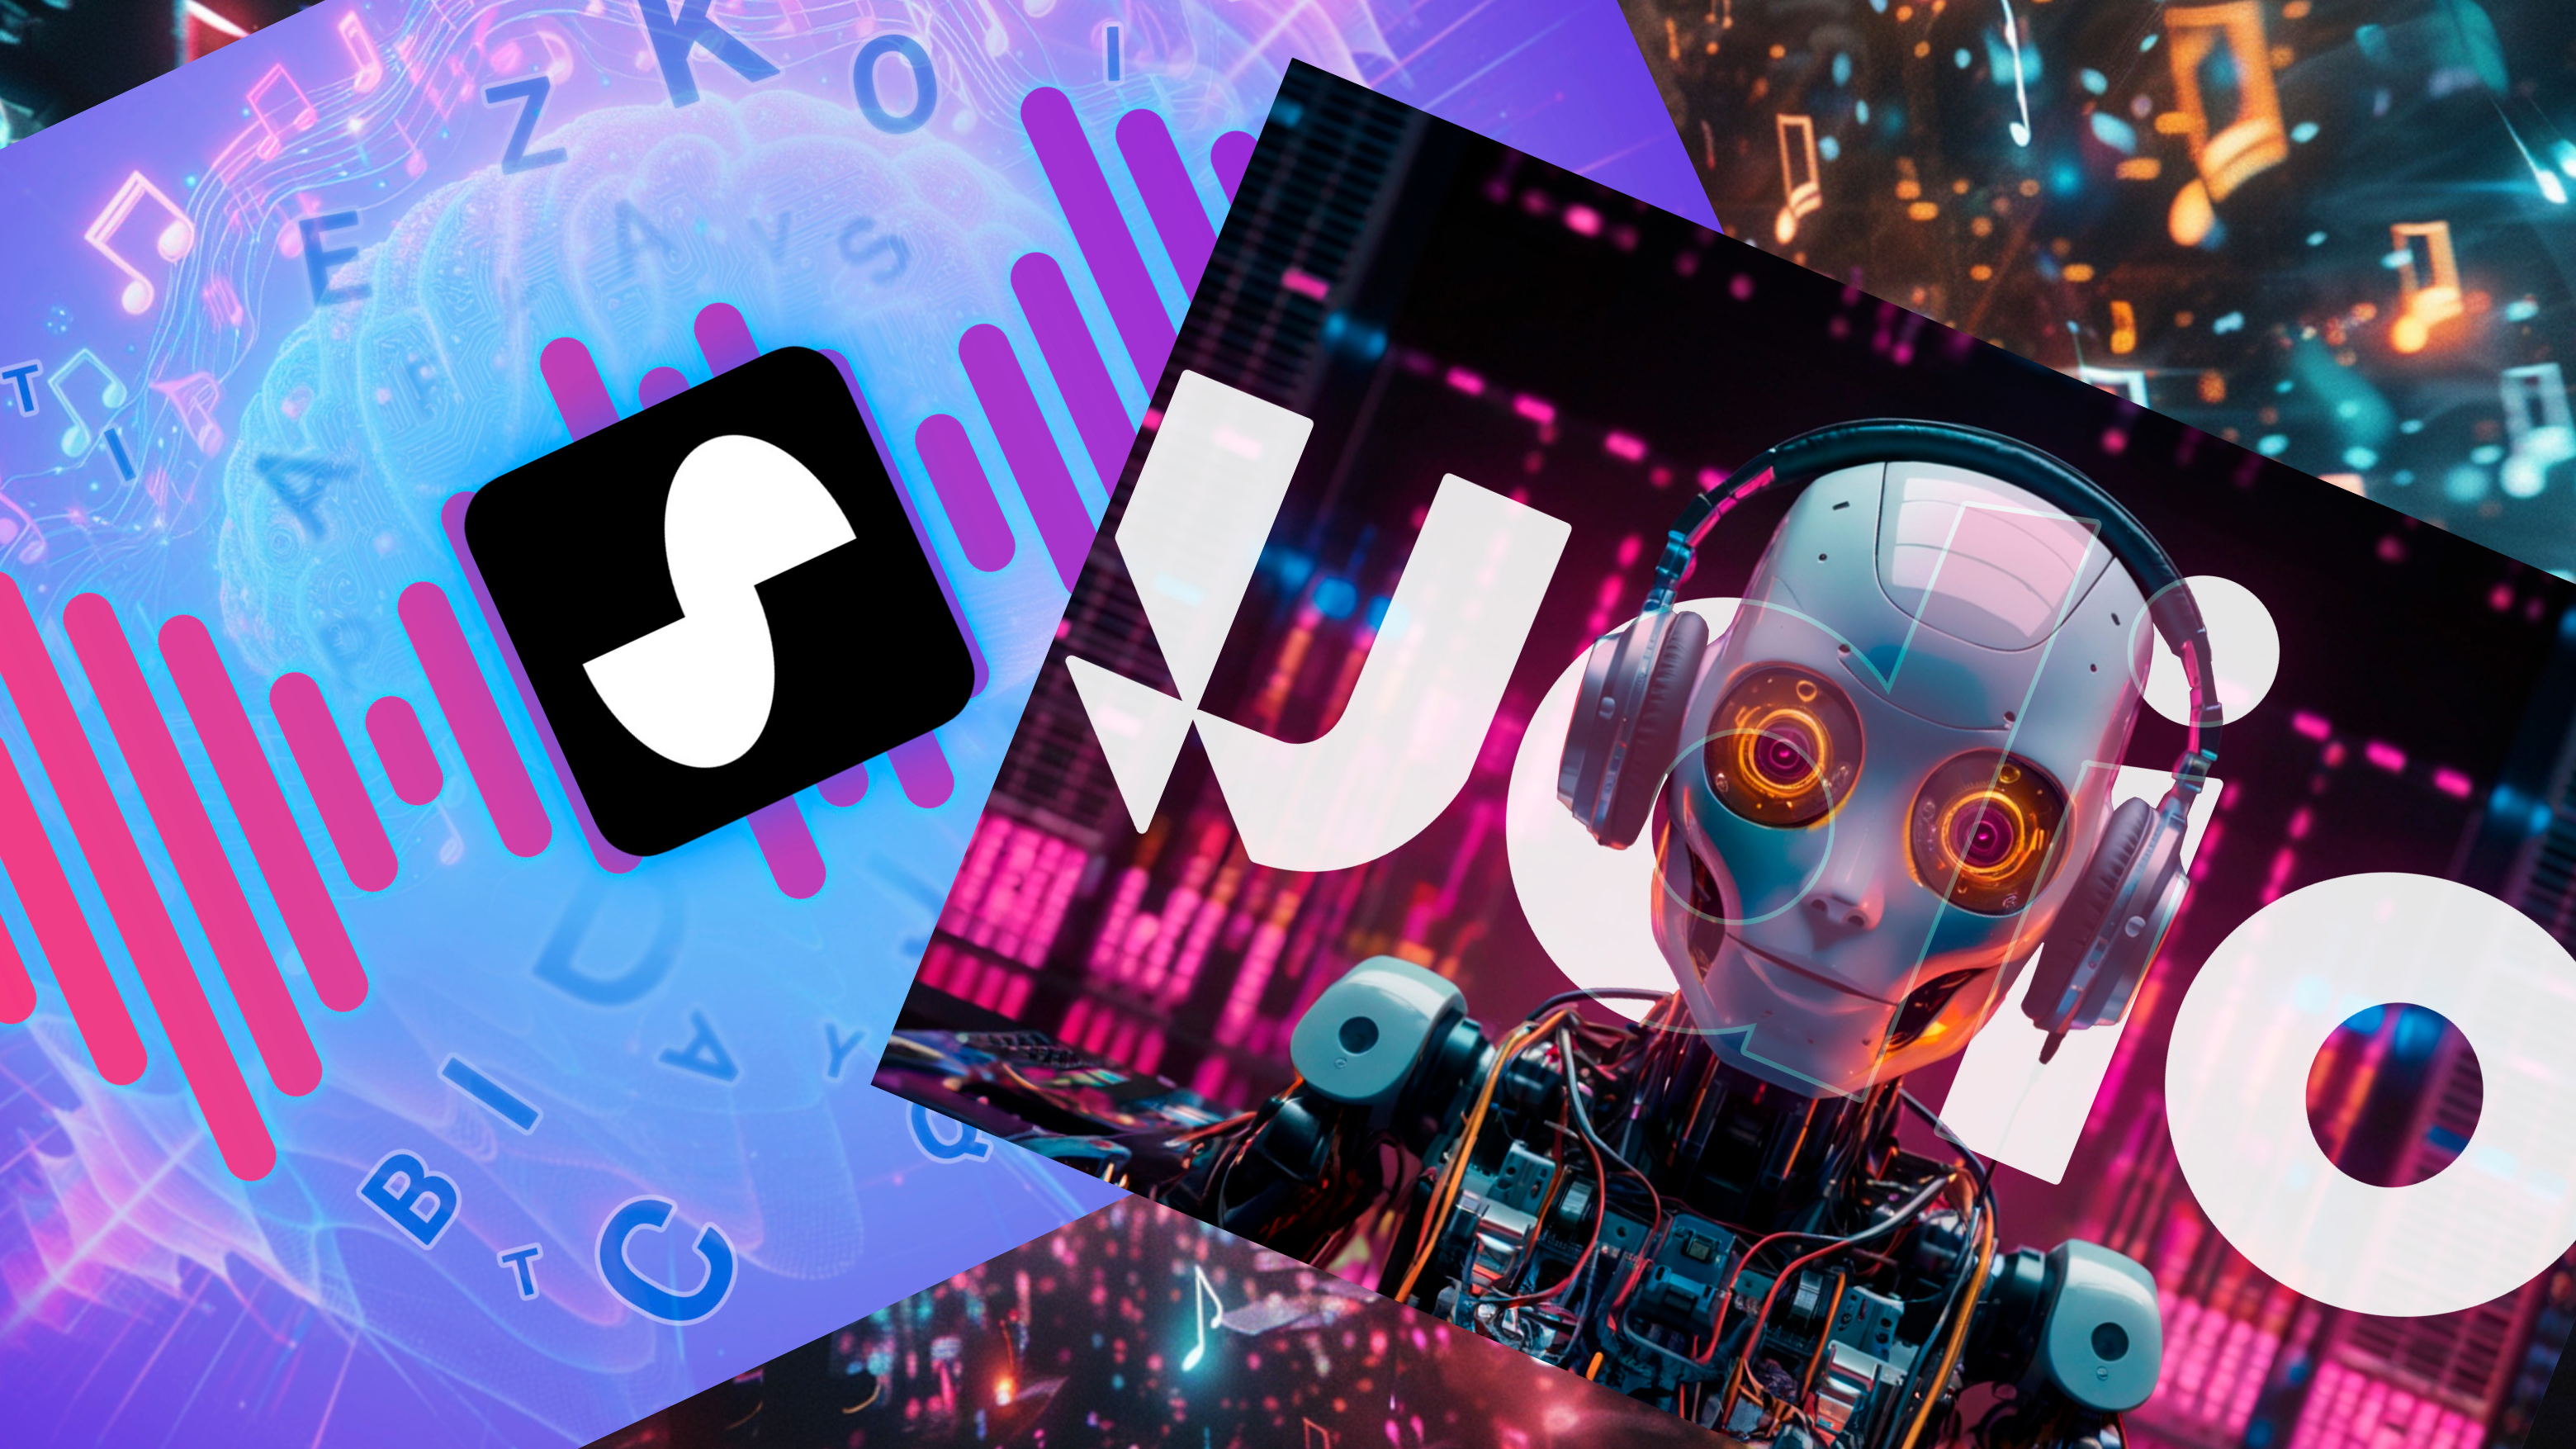 Suno logo and Udio logo in a AI geneated backdrop